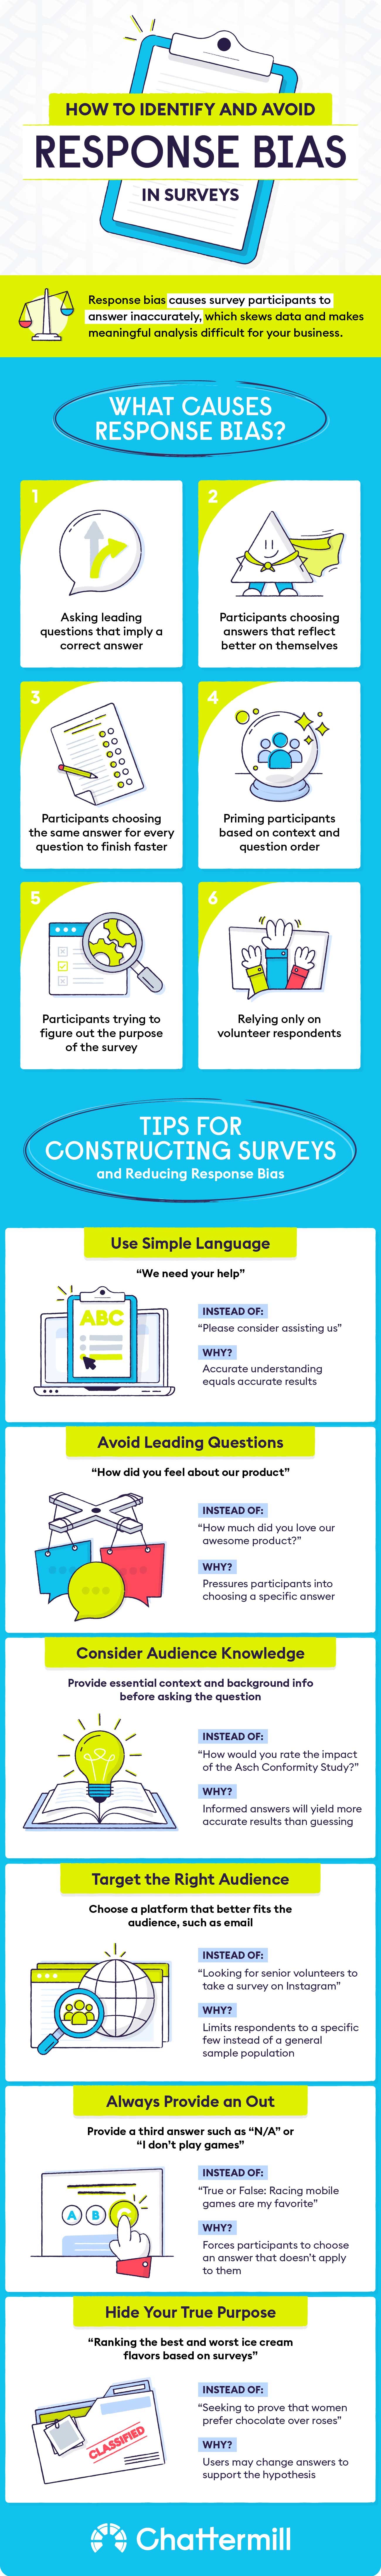 Survey Response Bias Infographic